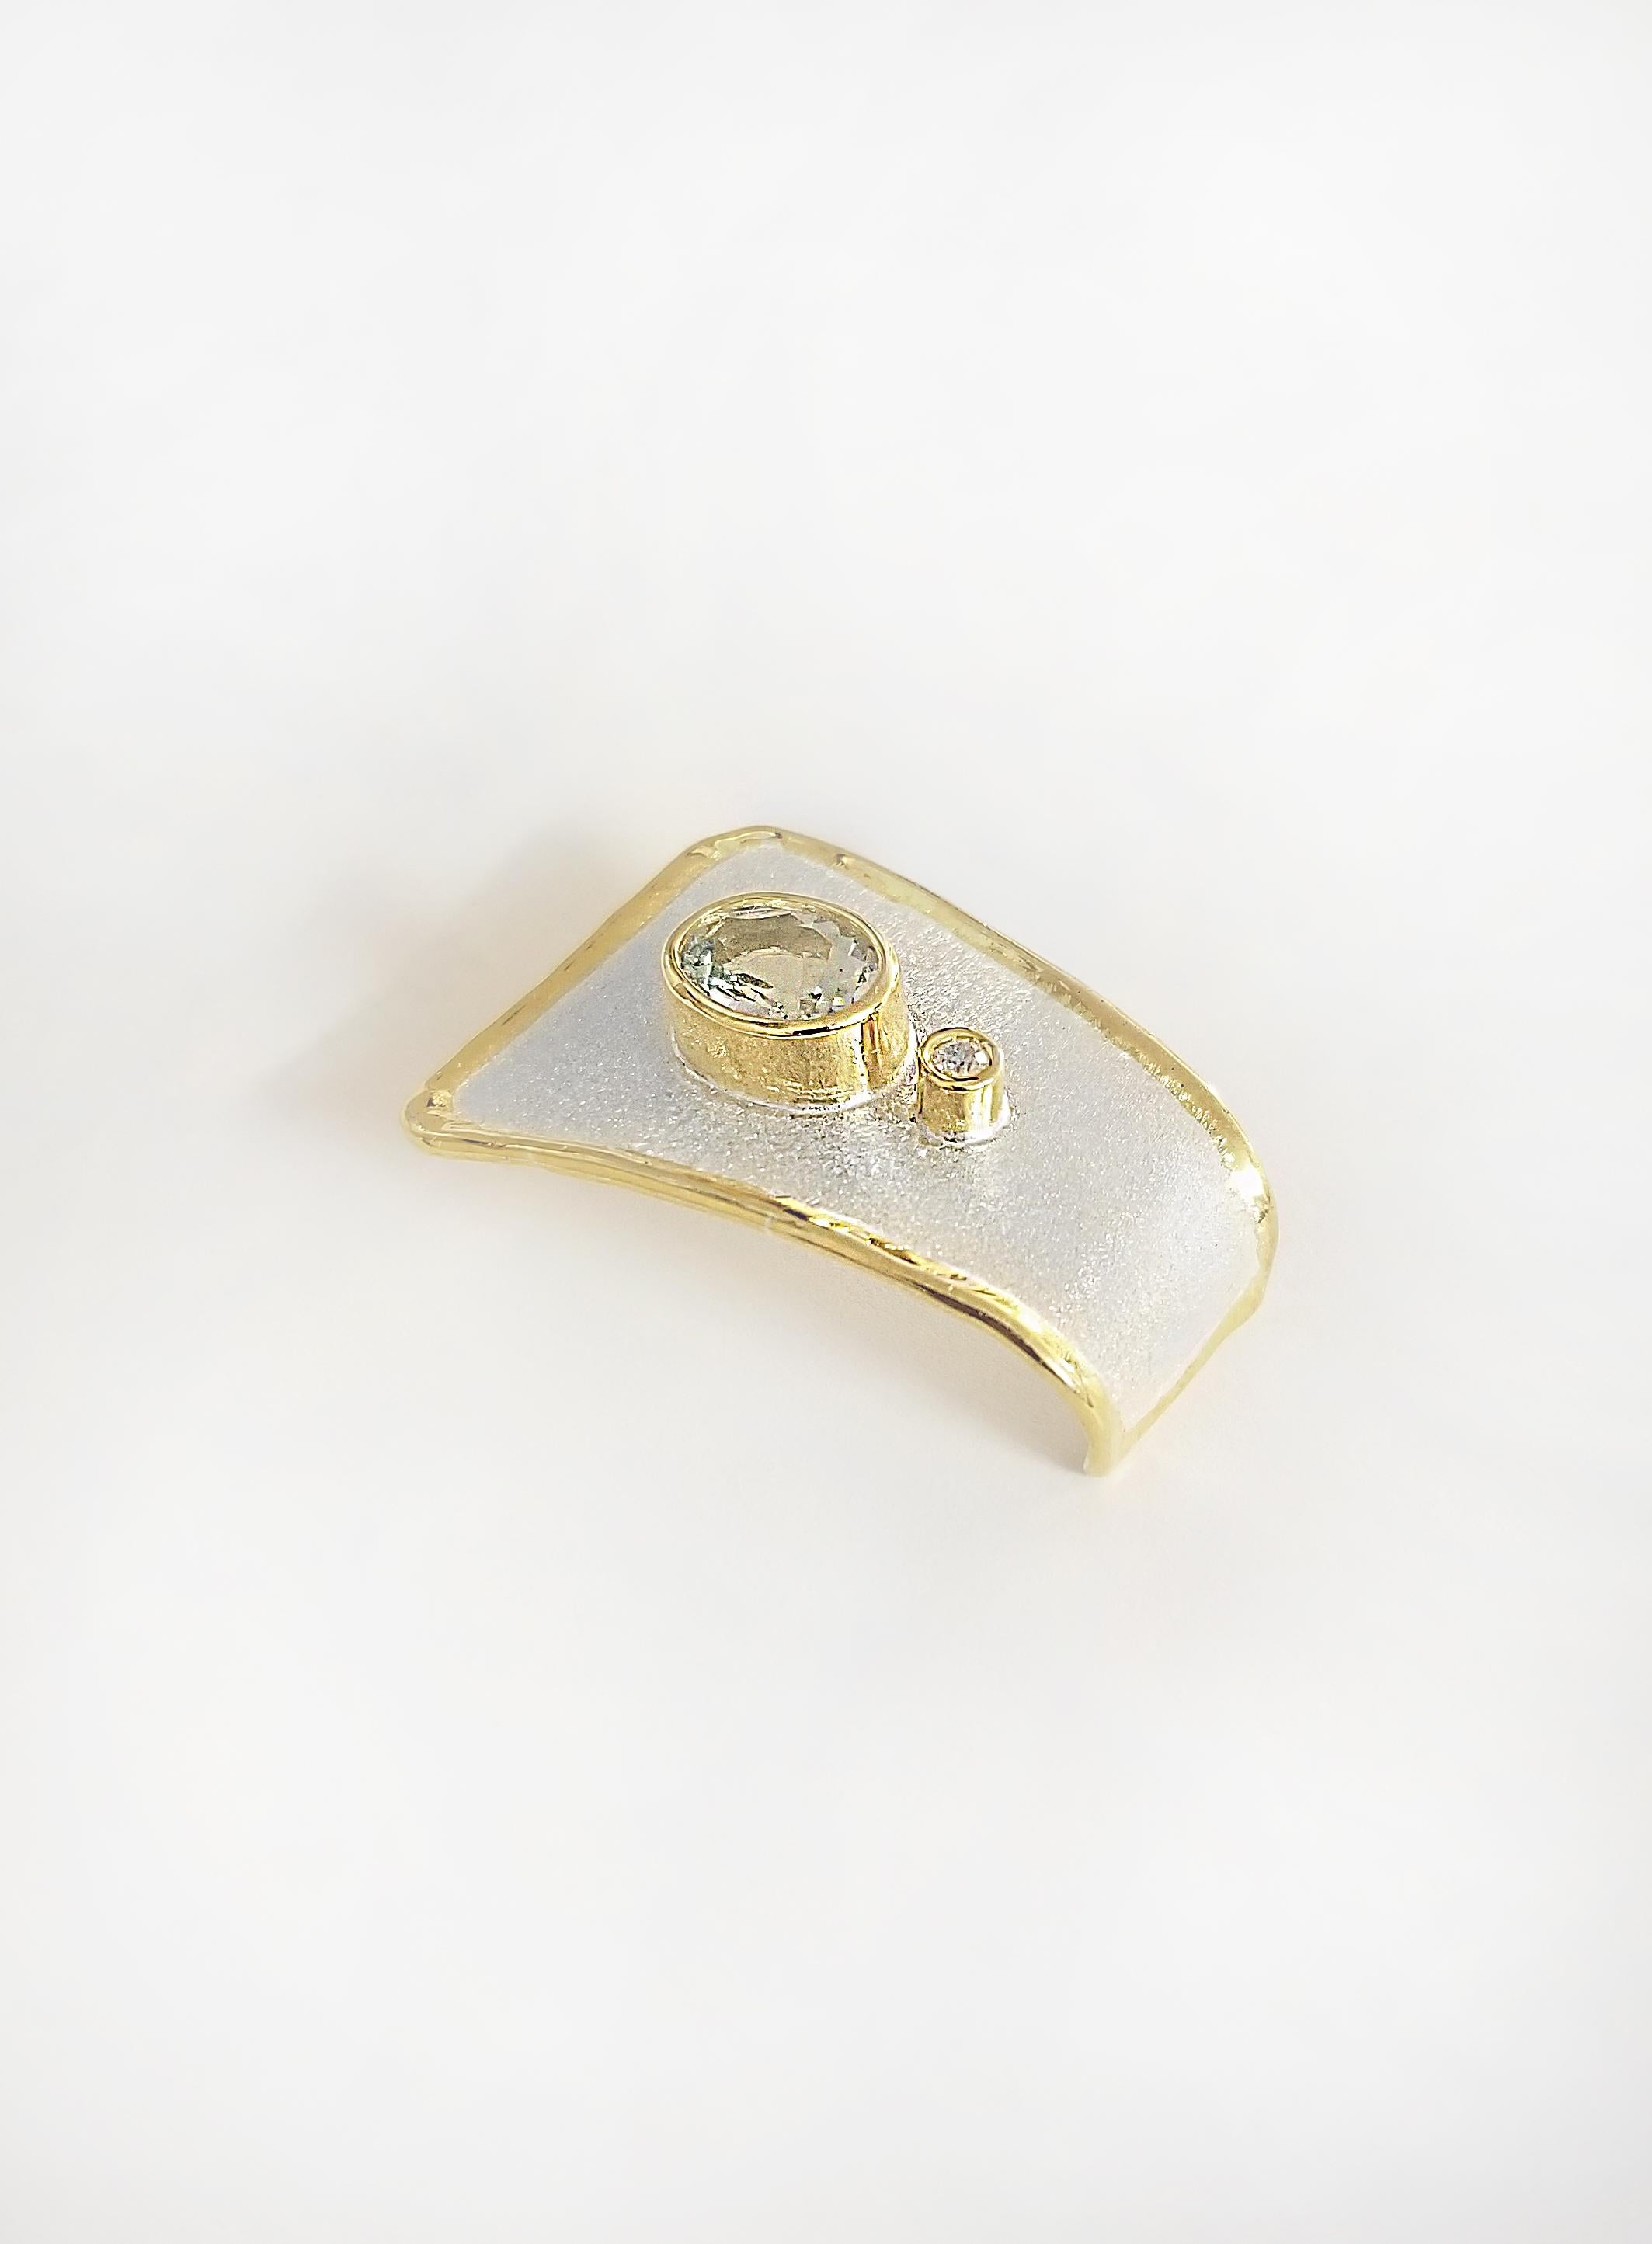 Contemporary Yianni Creations 1.75 Carat Aquamarine Diamond Fine Silver 24 Karat Gold Pendant